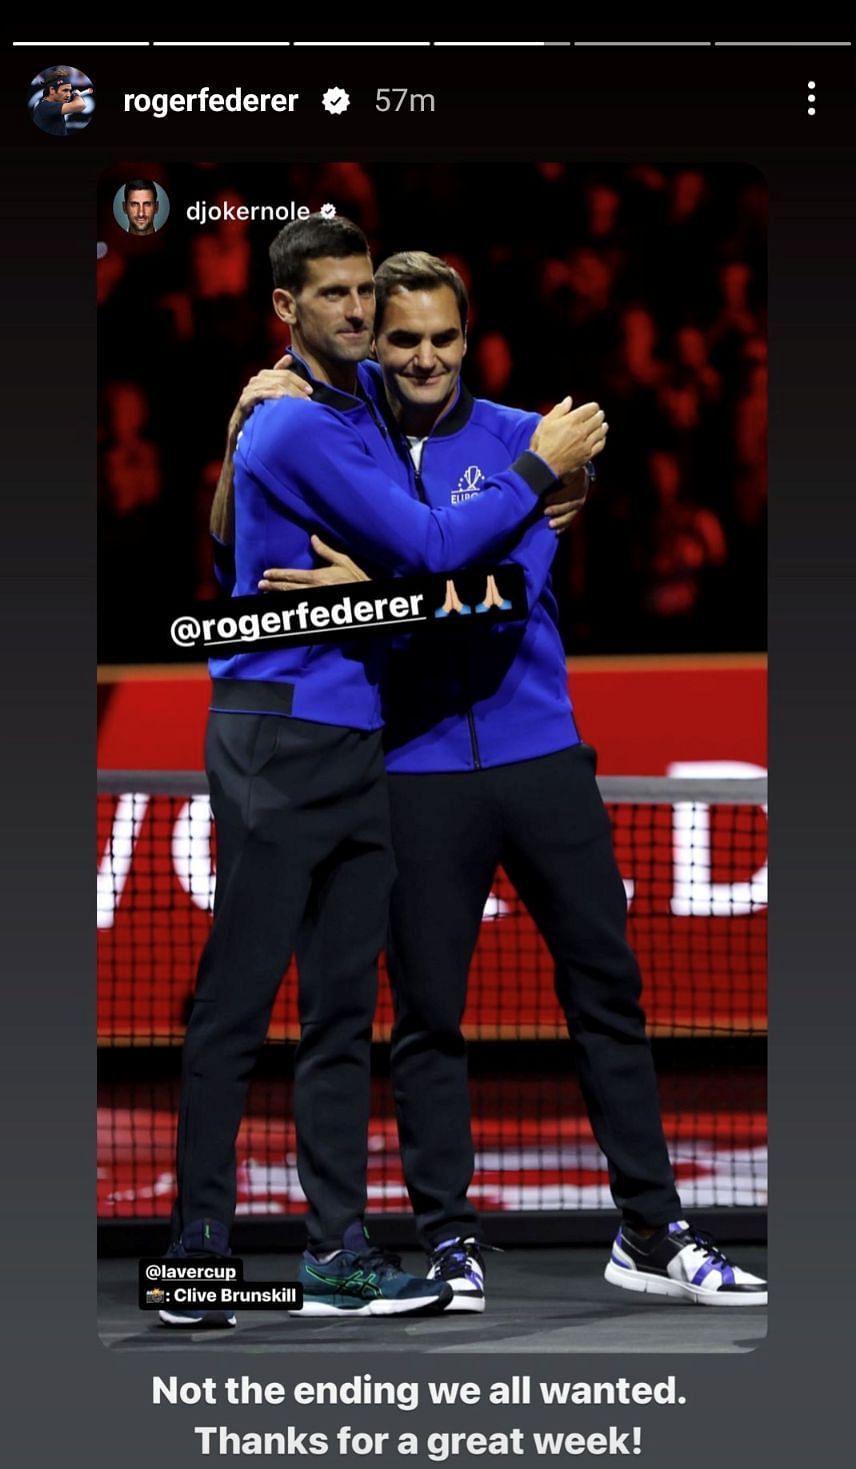 Roger Federer on instagram stories